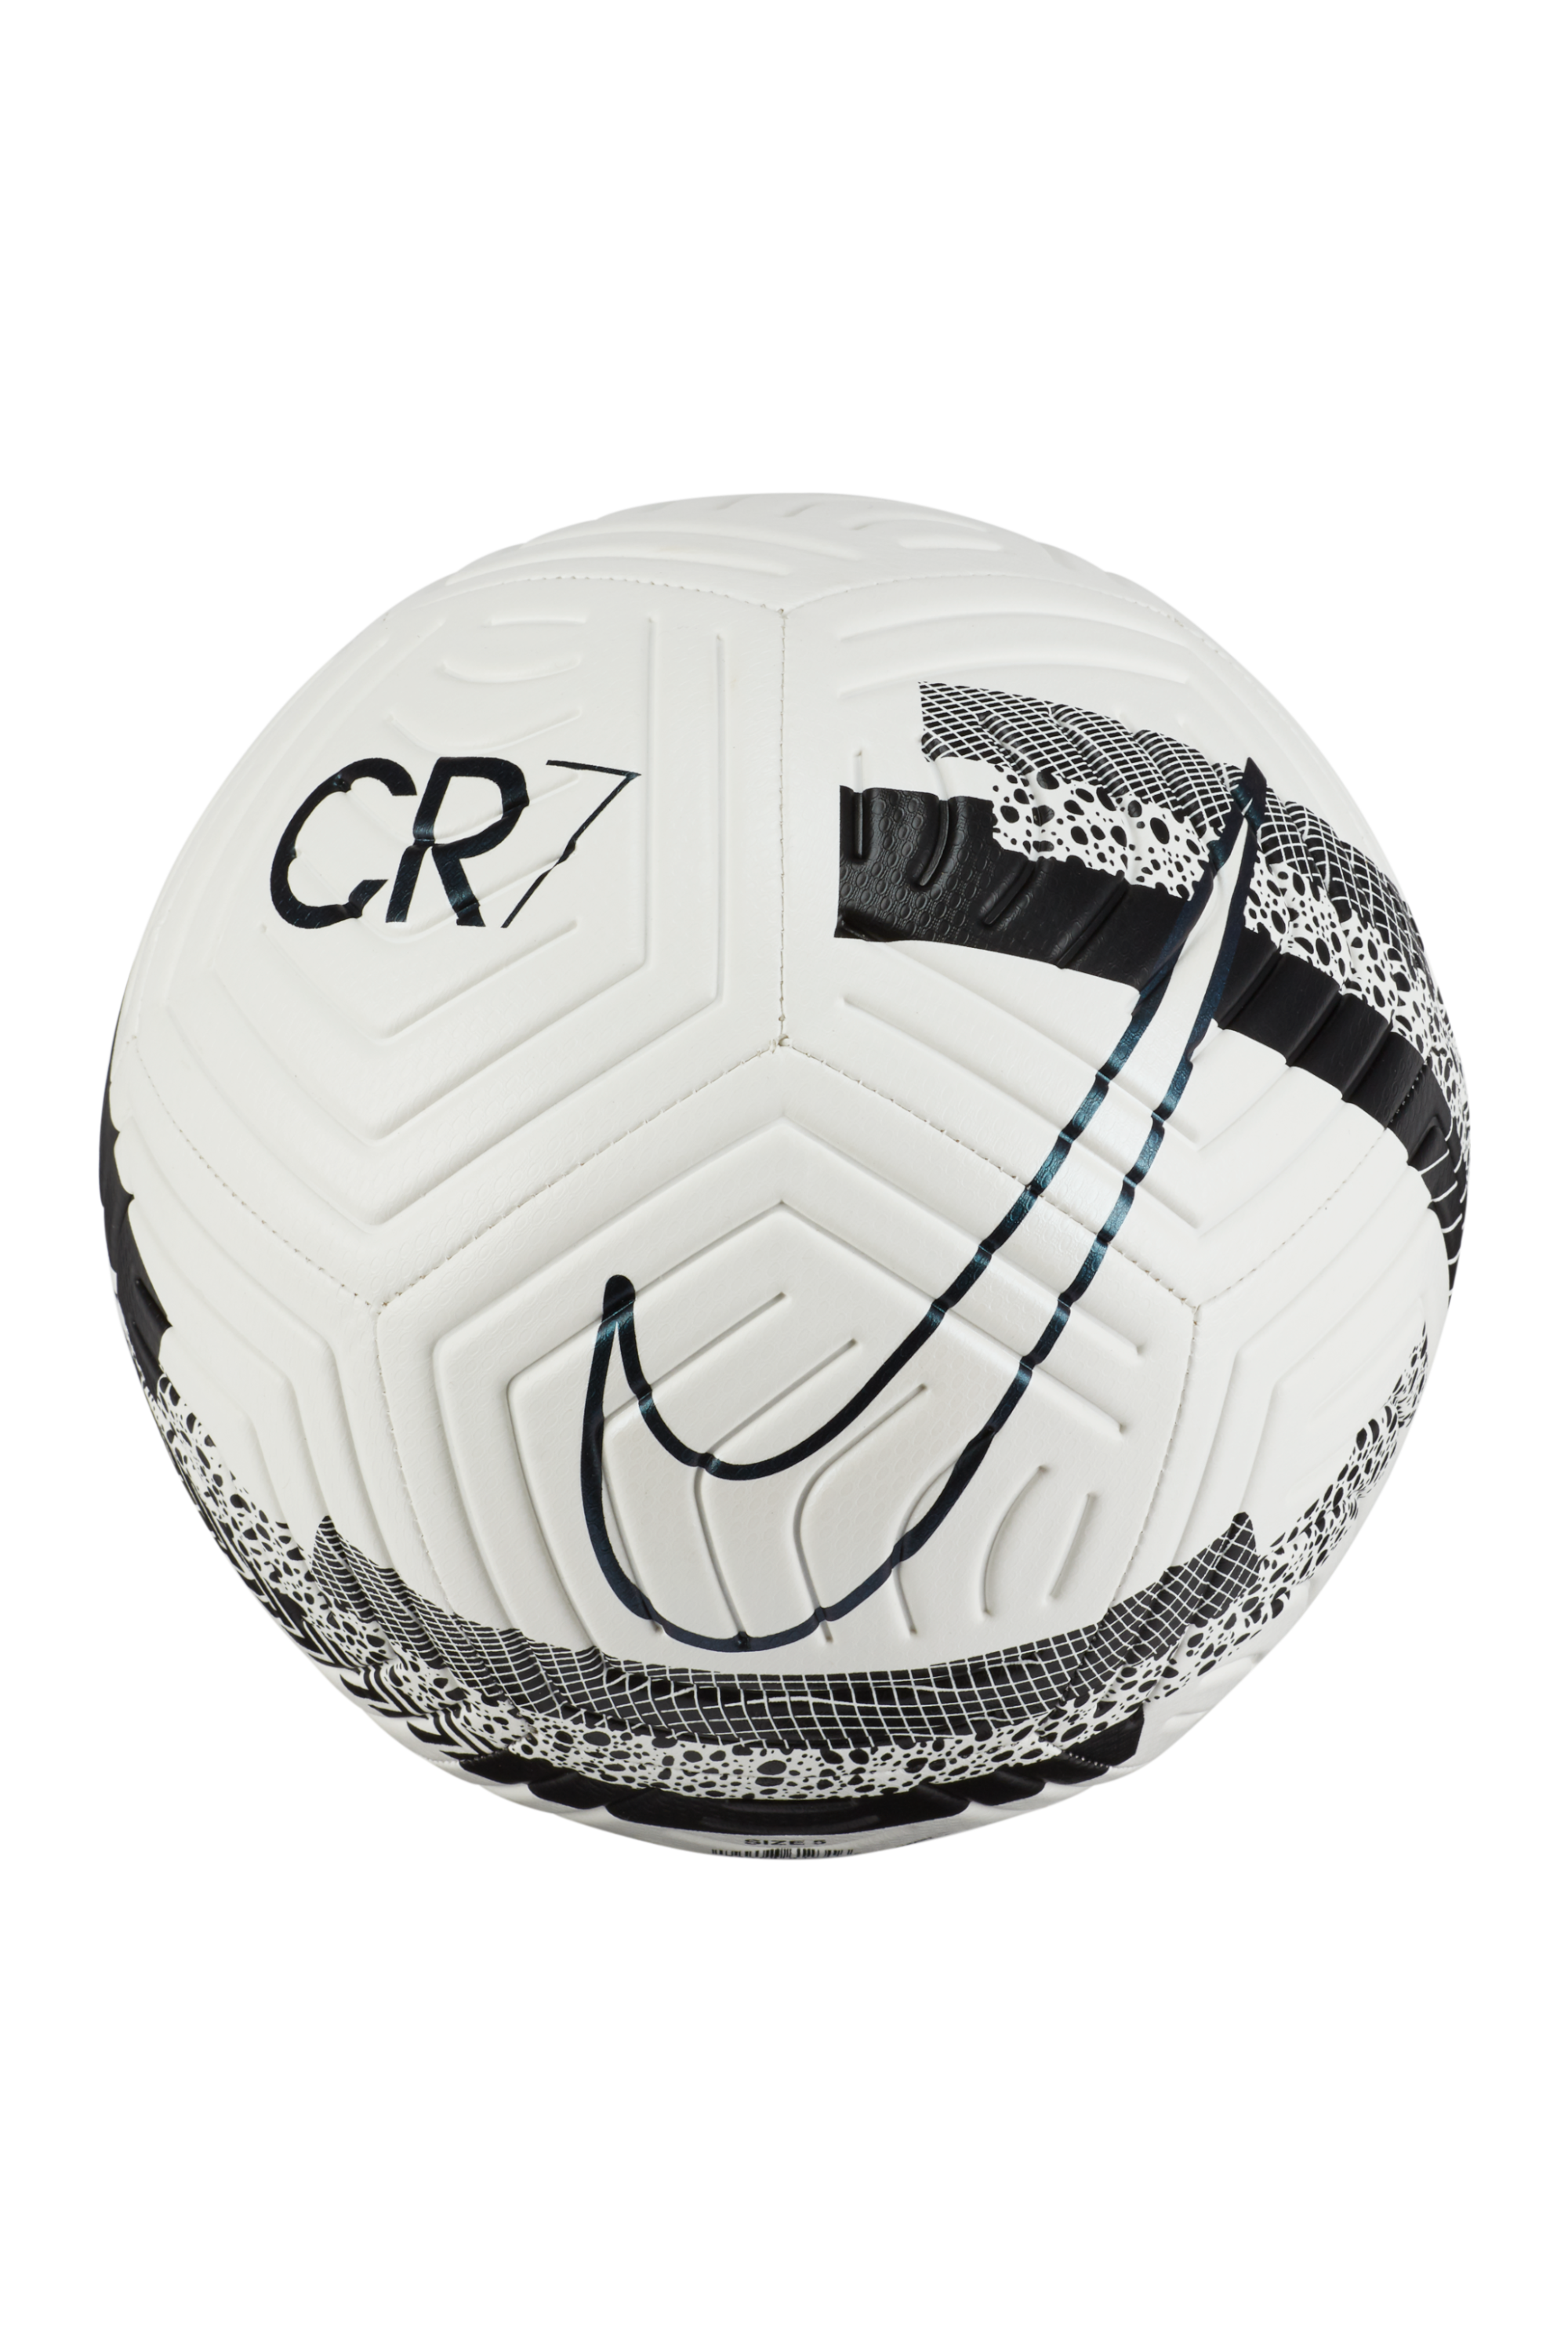 cr7 soccer ball size 4